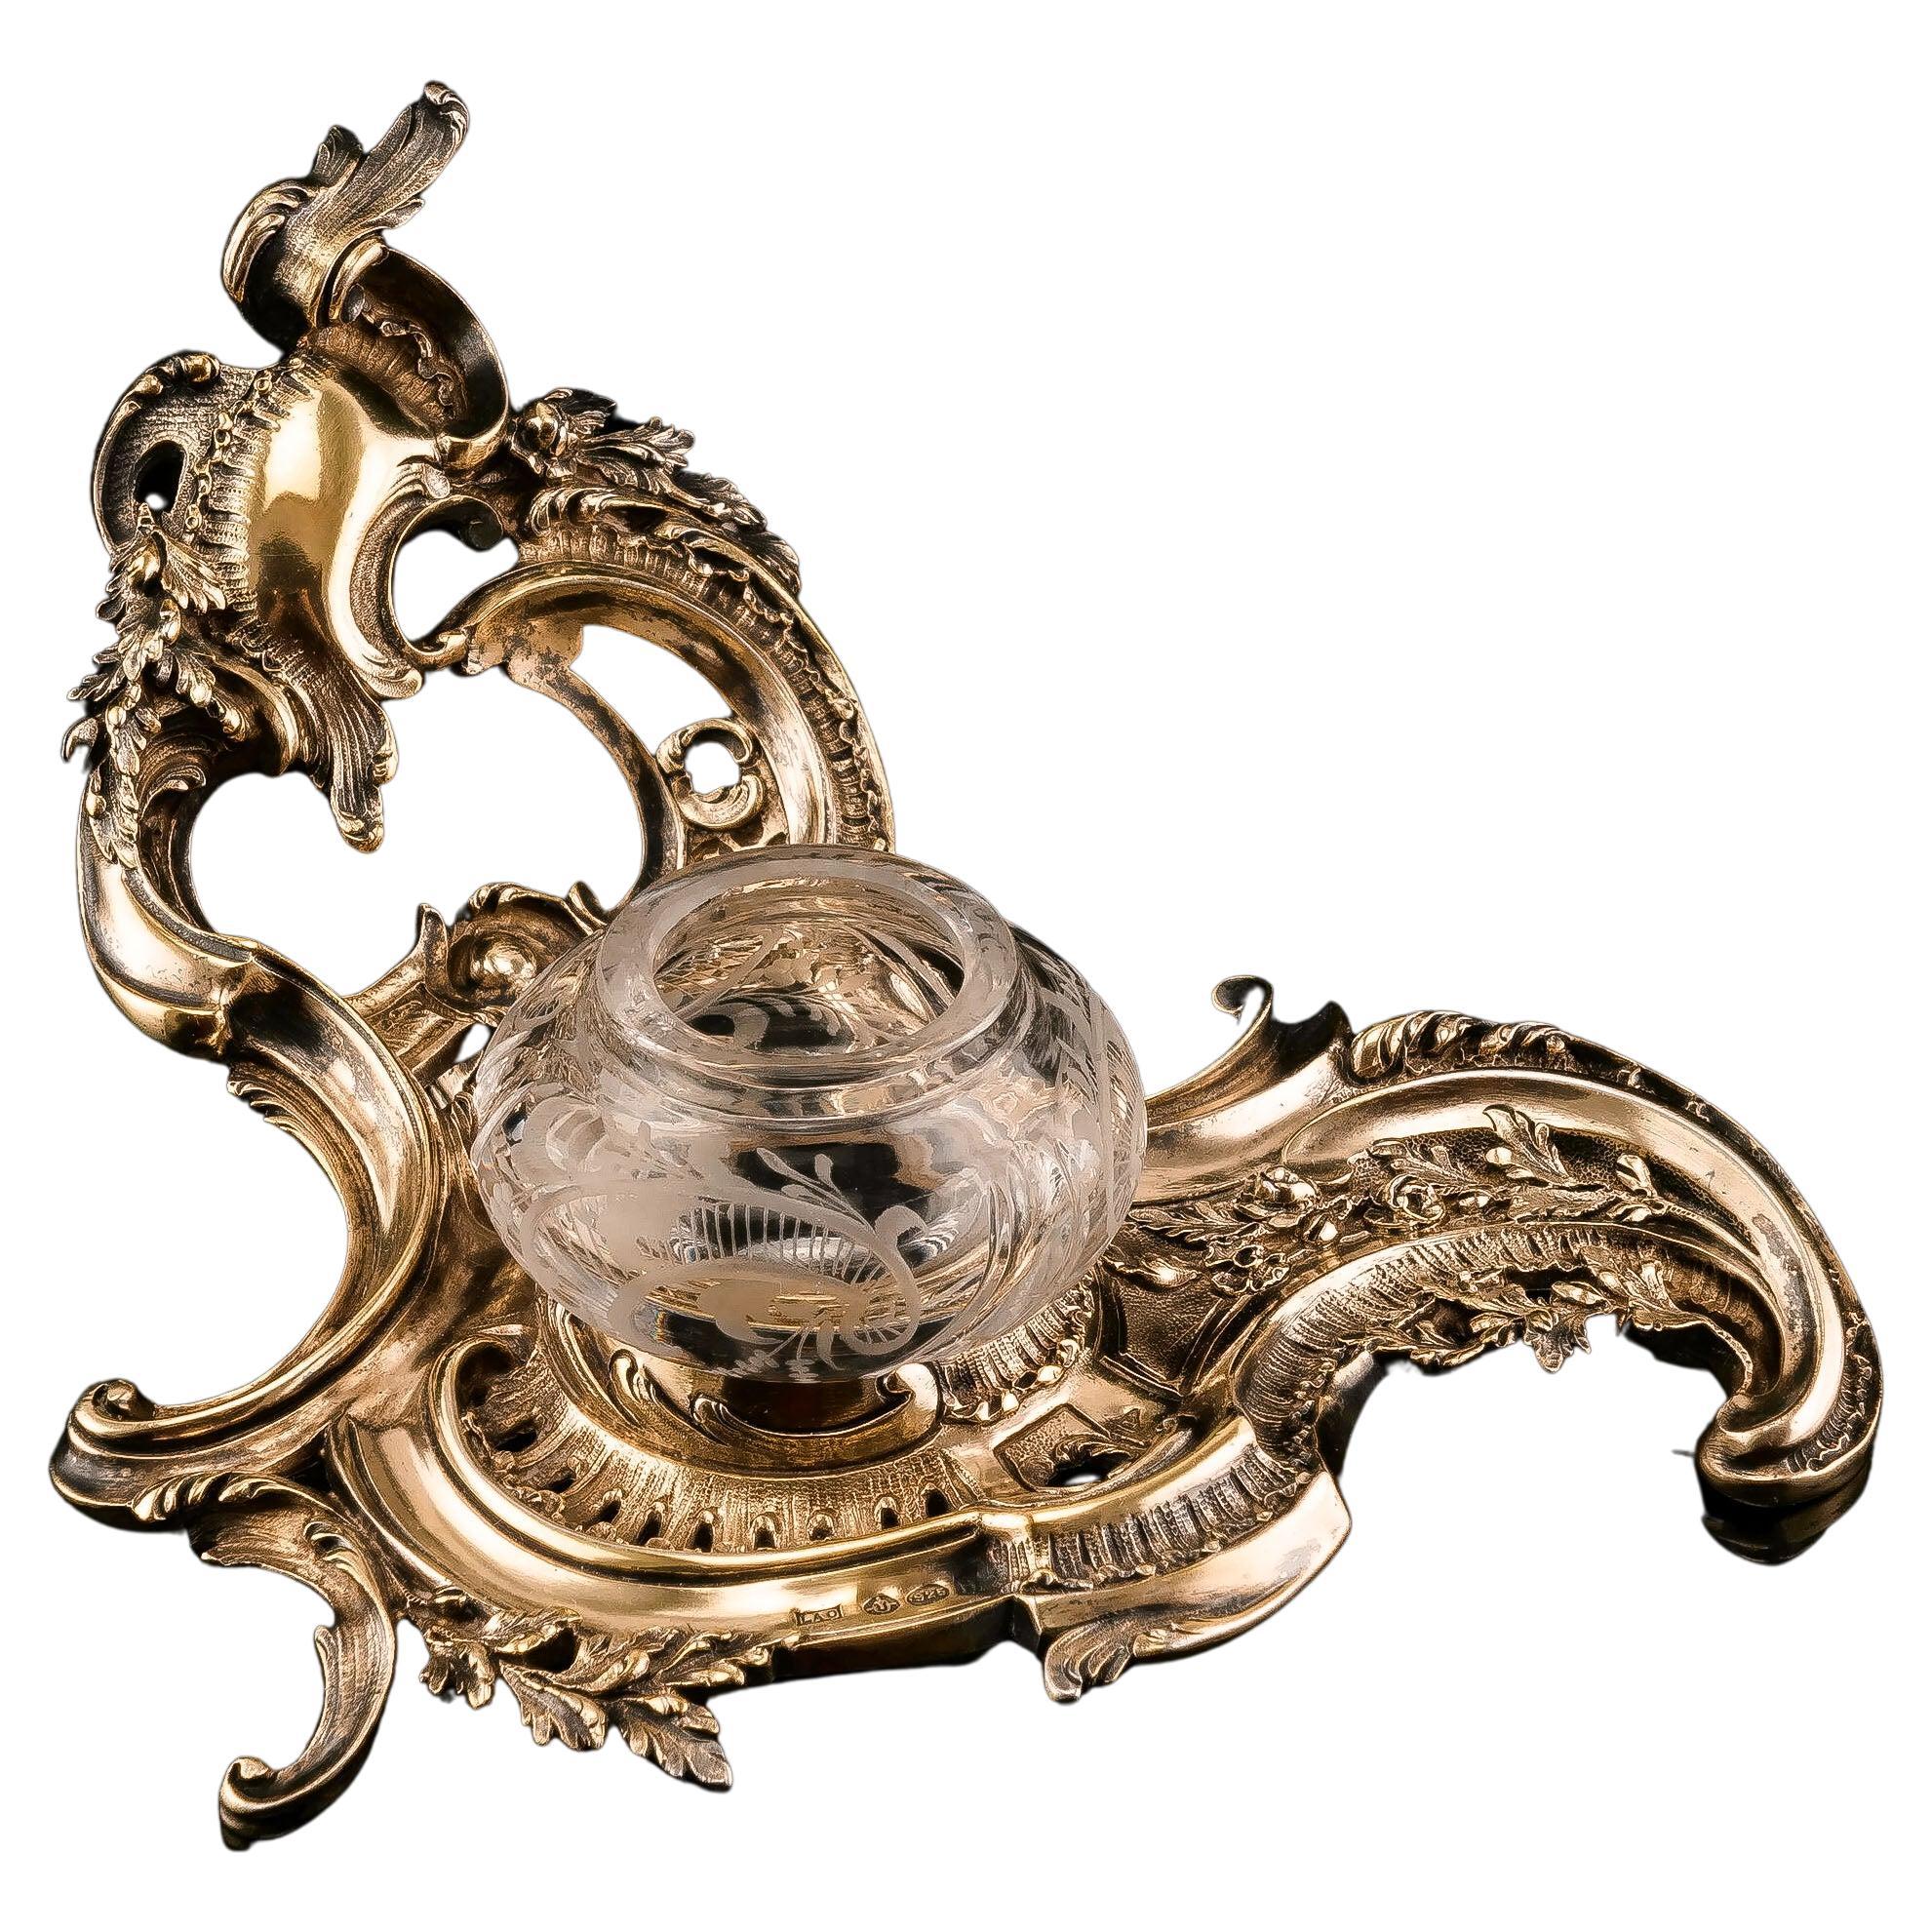 Antike Französisch massivem Silber vergoldet Rokoko-Stil Tintenfass / Stand, Emile Puiforcat